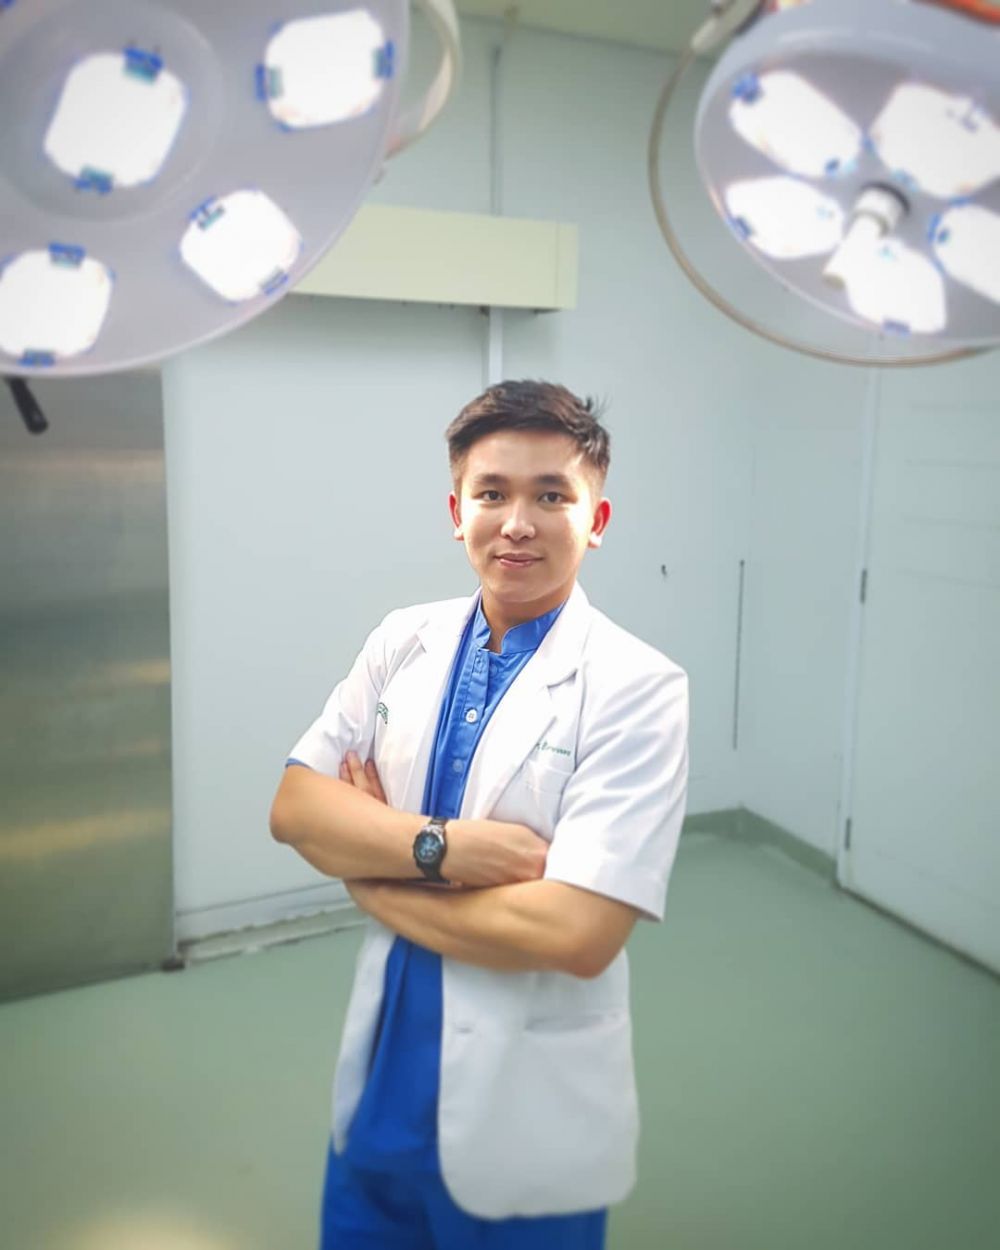 10 Karisma dokter Ervan, cowok yang dinner bareng Ayu Ting Ting